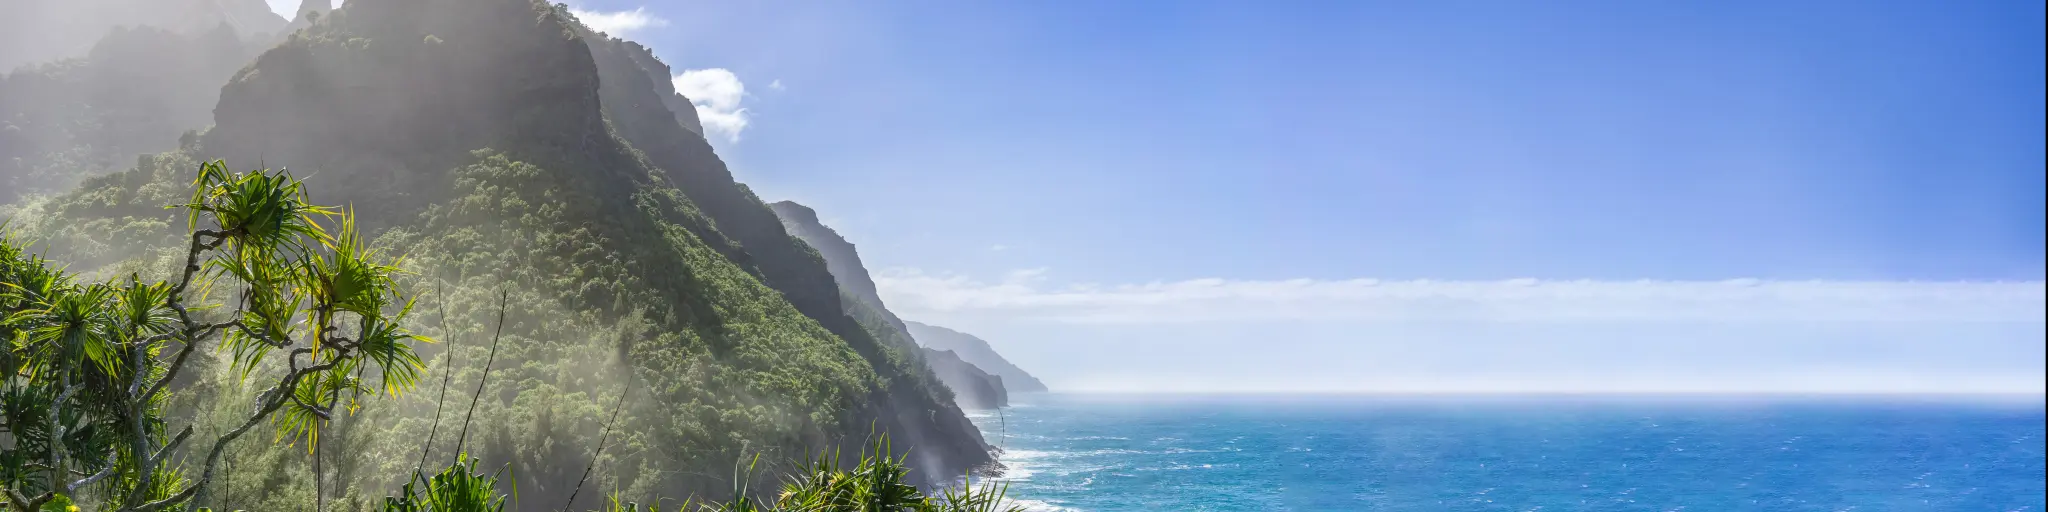 Cliffs facing the ocean in Na Pali Coast State Park on Kauai island in Hawaii